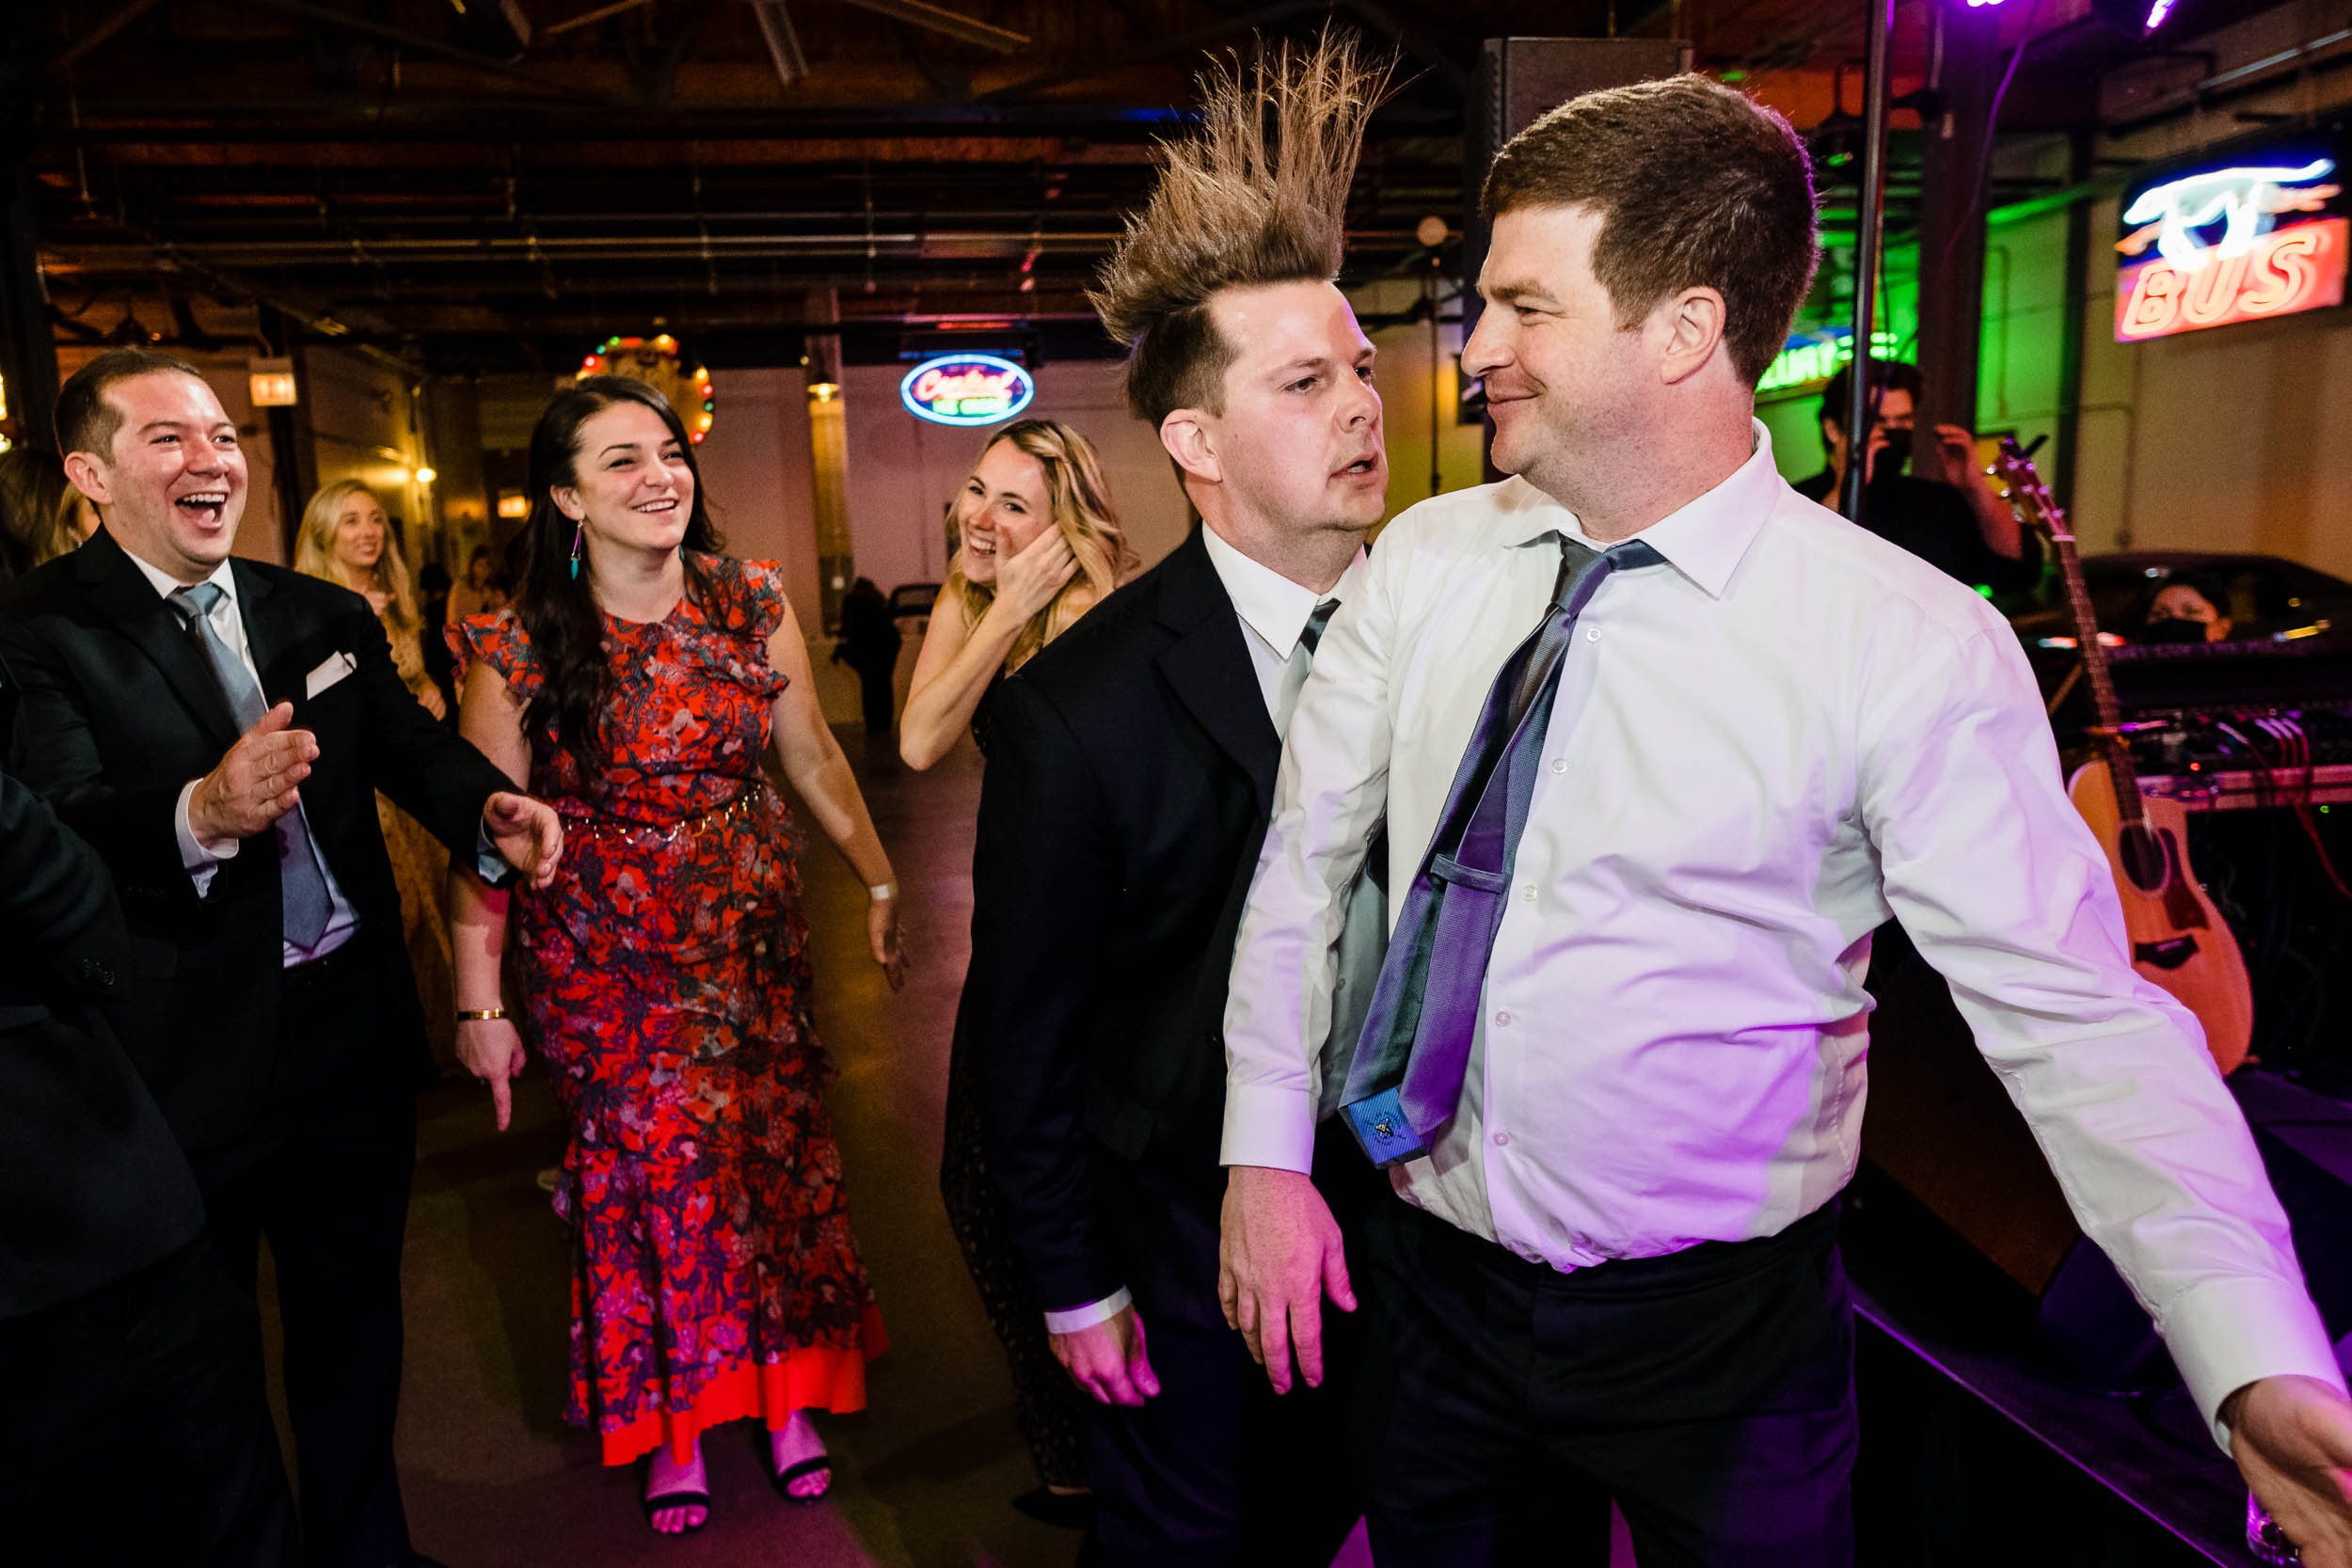 Ravenswood Event Center | Indoor Wedding Reception Dancing | Chicago IL